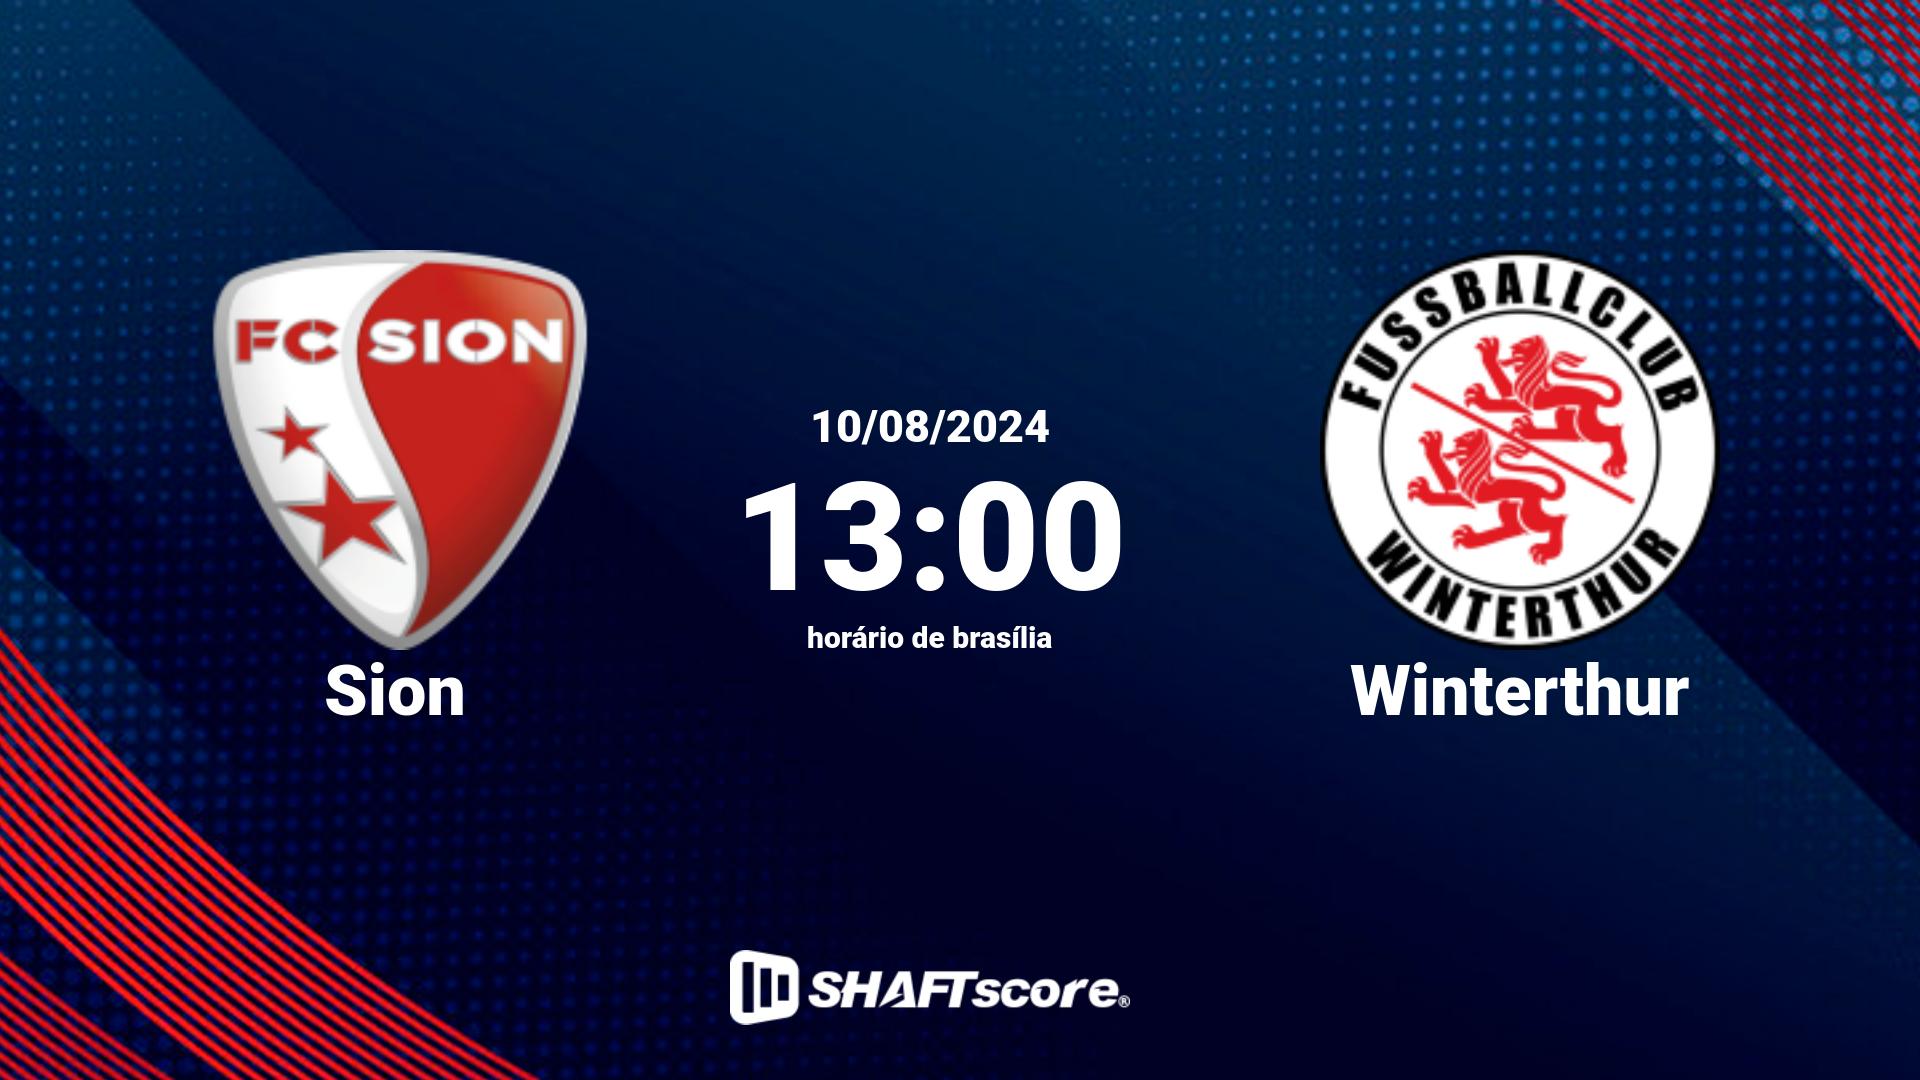 Estatísticas do jogo Sion vs Winterthur 10.08 13:00